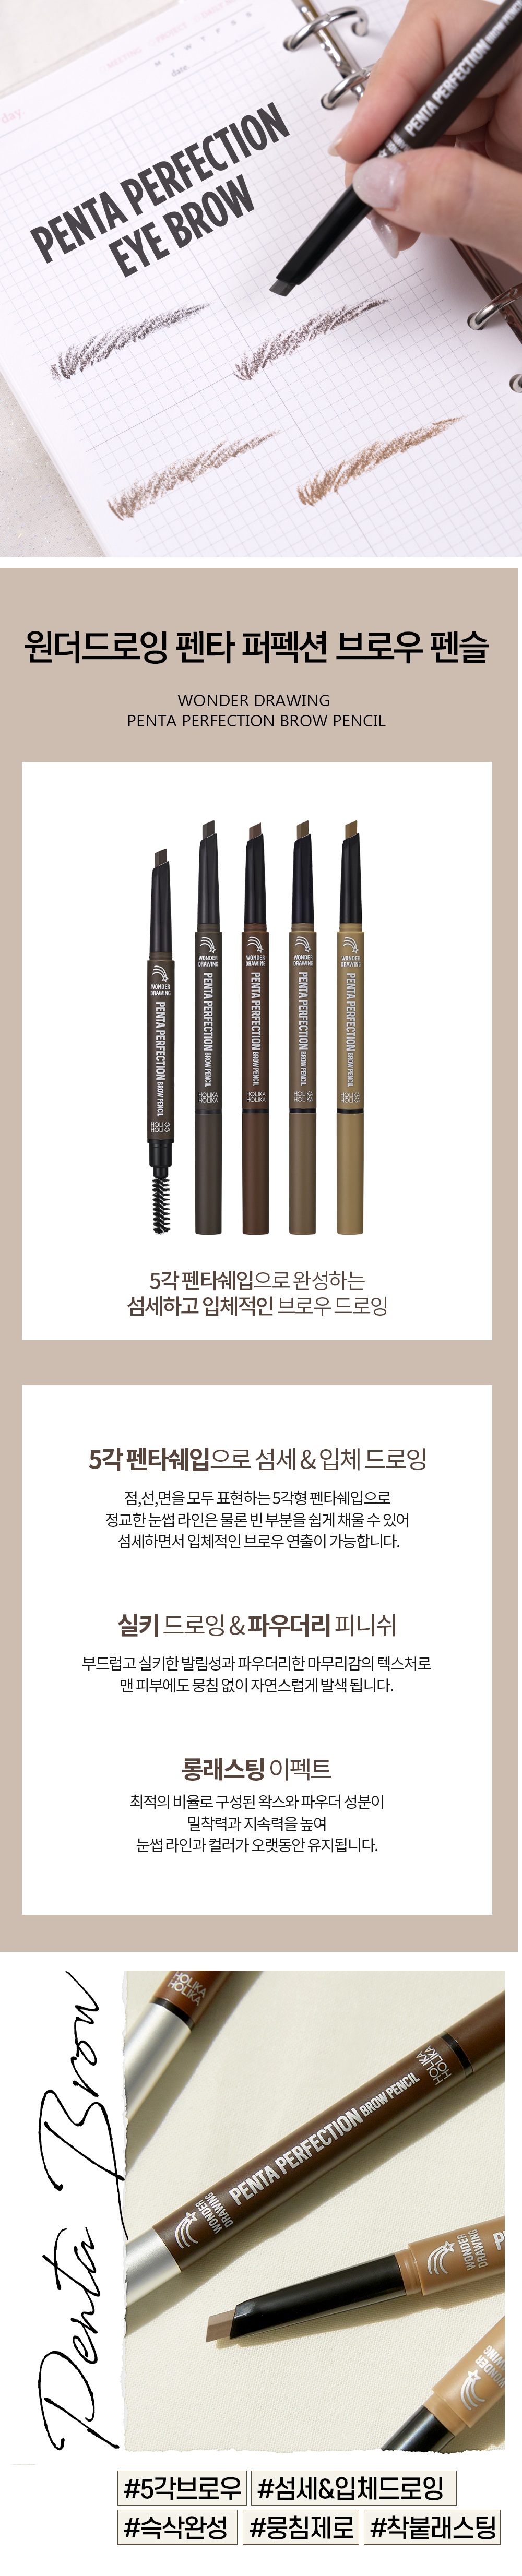 Holika Holika Wonder Drawing Penta Perfection Brow Pencil korean makeup product online shop malaysia China indonesia1